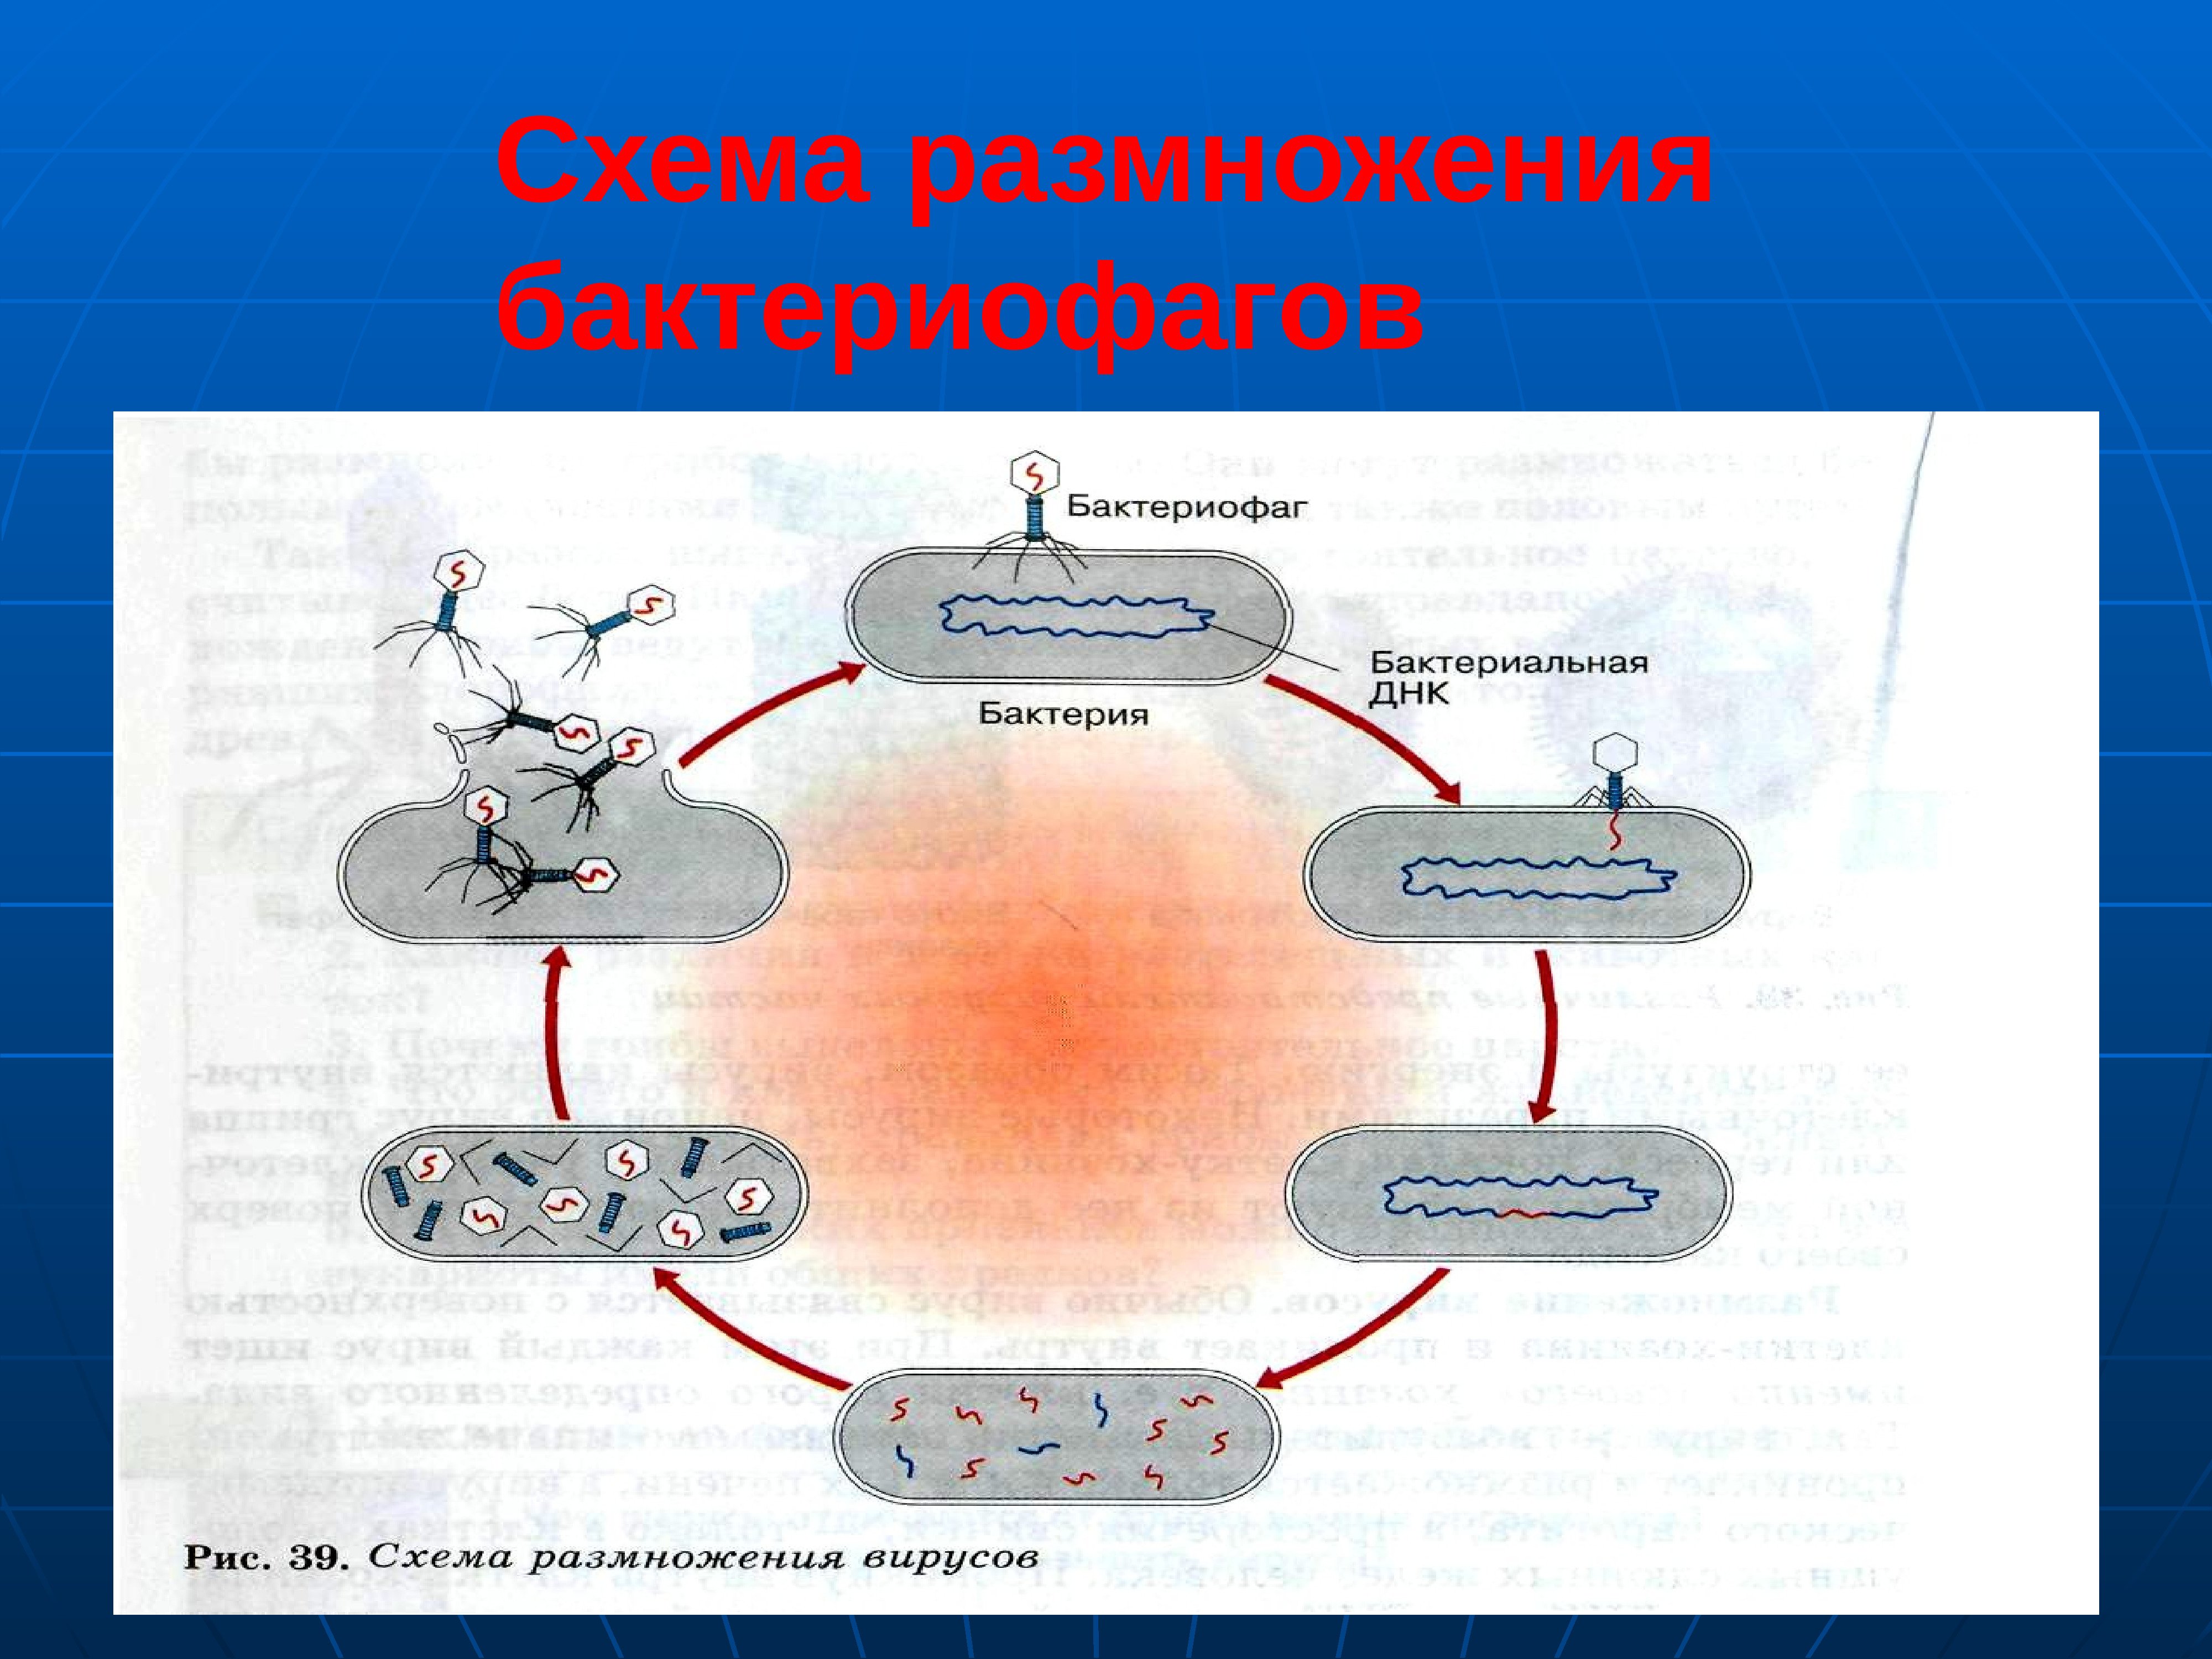 Размножение клетки жизненный цикл. Размножение вирусов схема. Схема цикла размножения бактериофага. Жизненный цикл бактерий схема. Размножение вируса бактериофага.